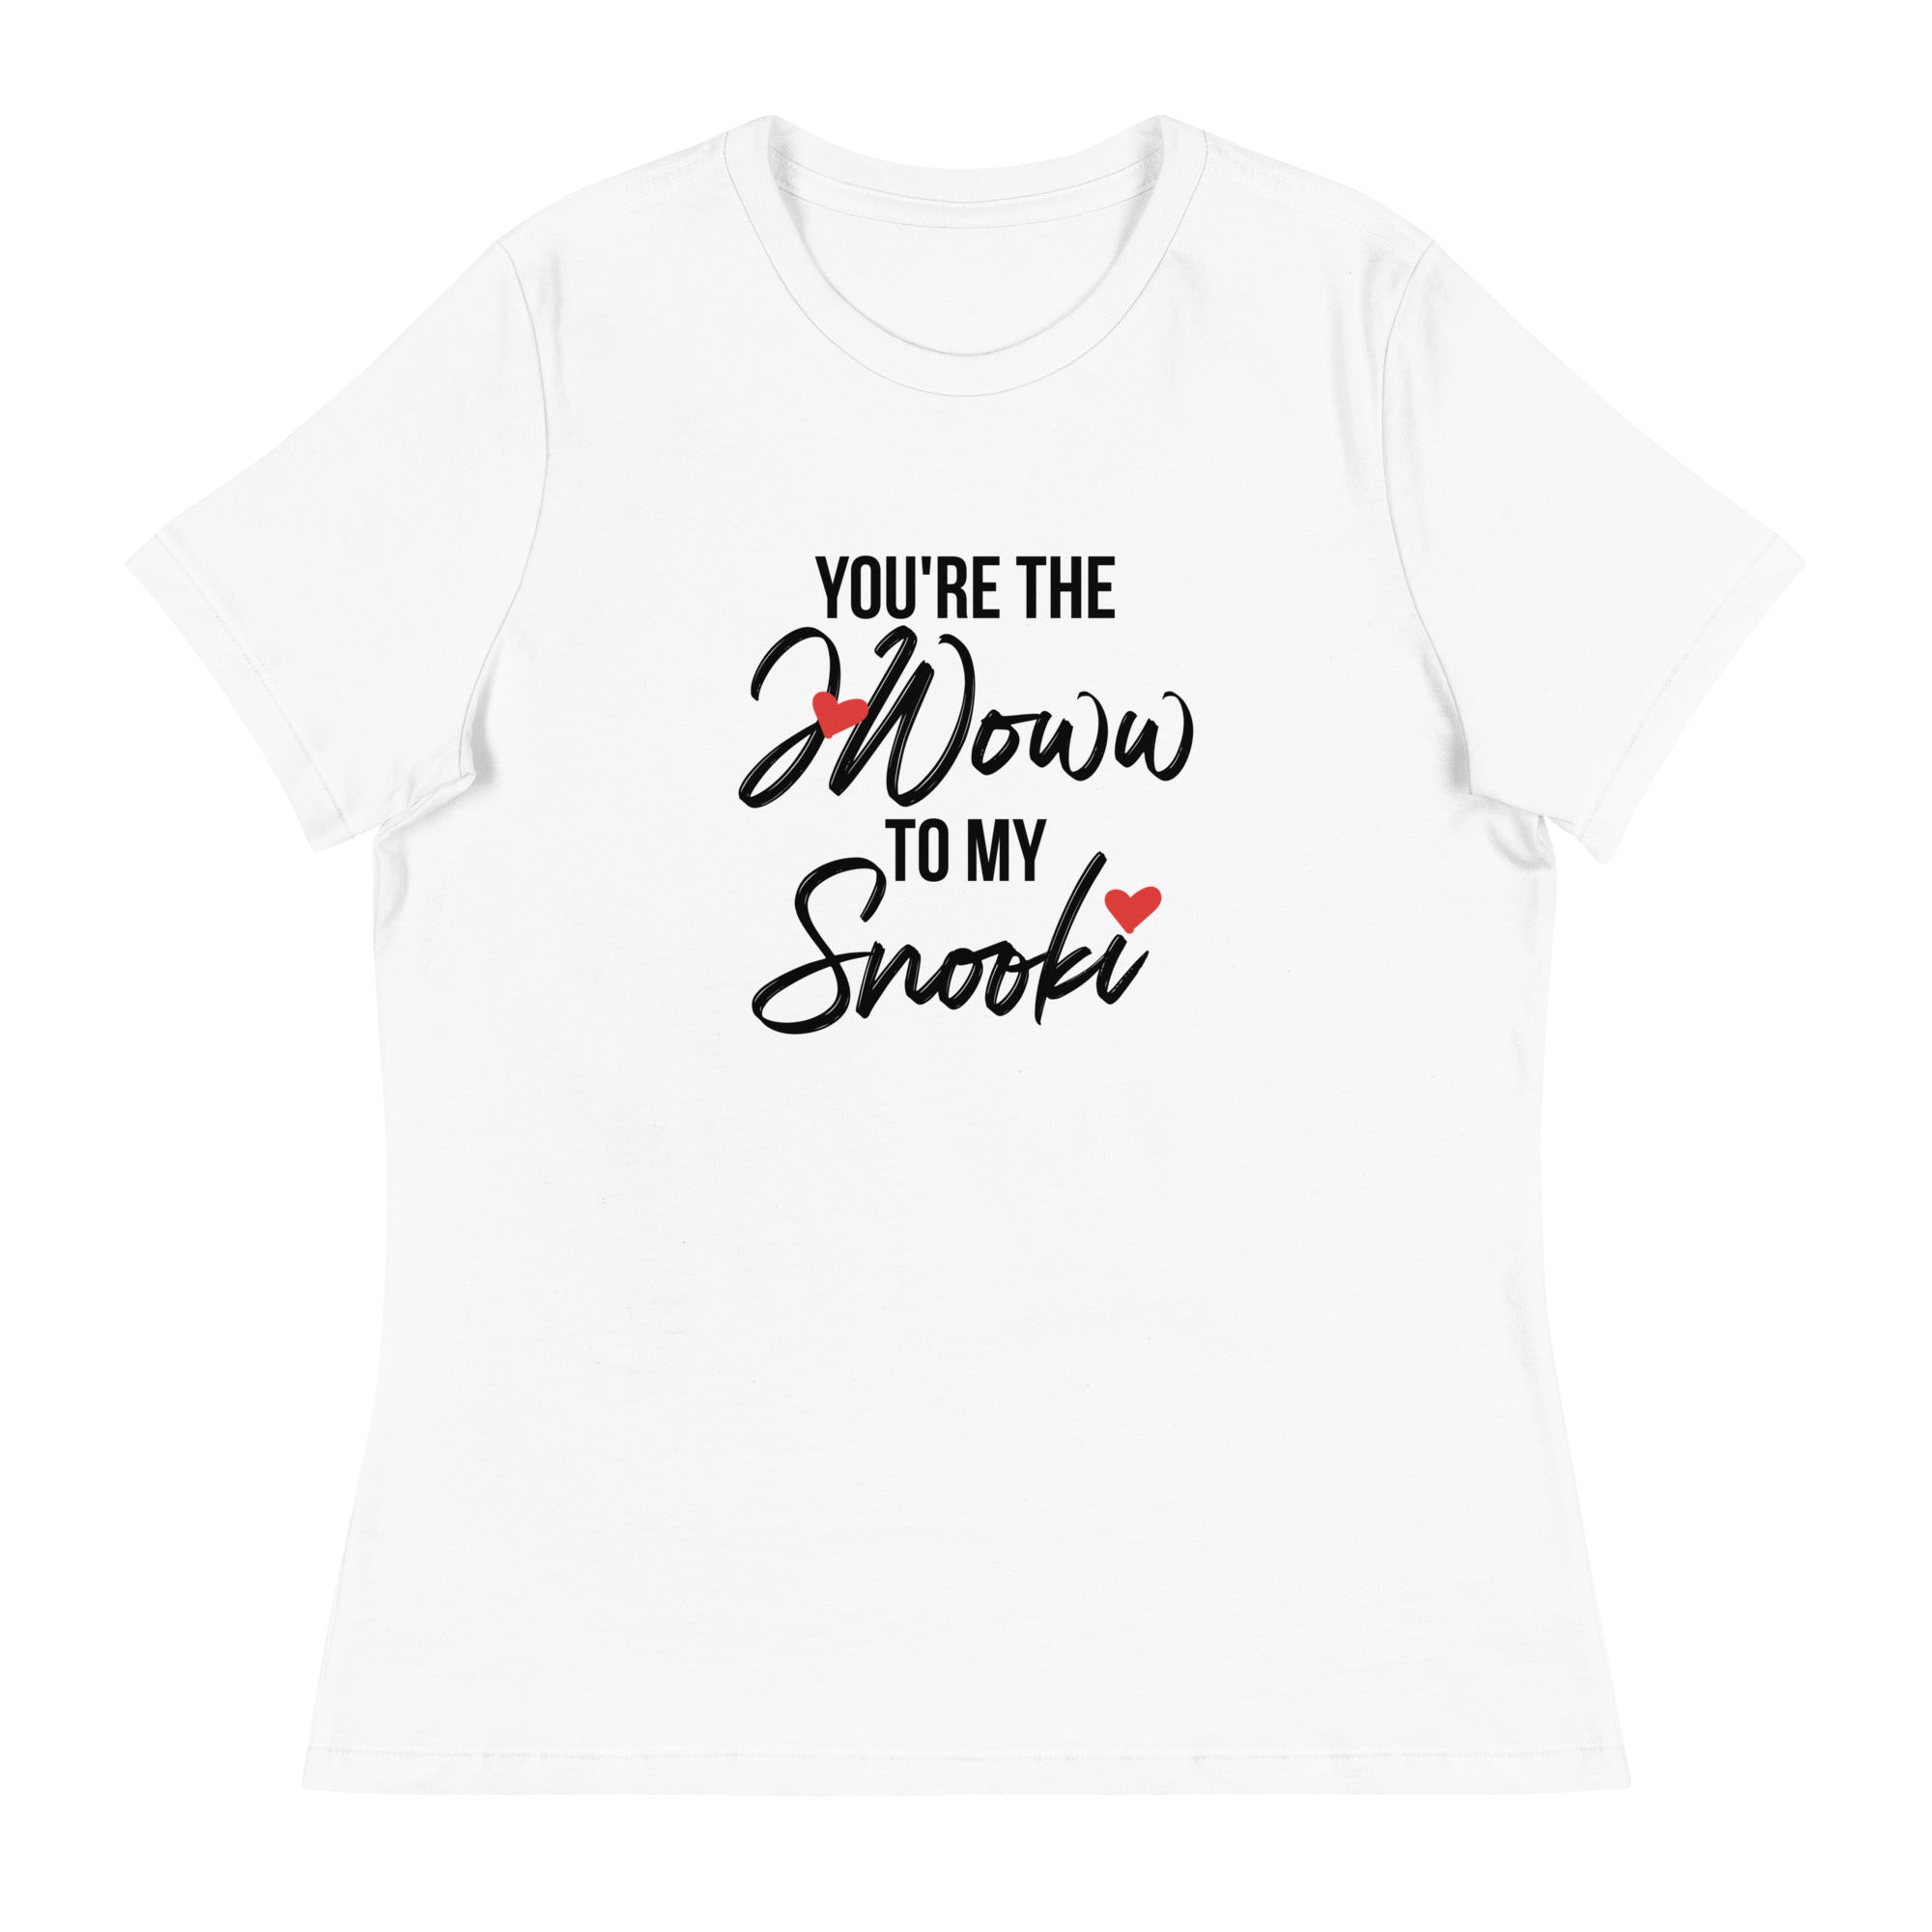 Wo Free Snooki woman Tee T-Shirt